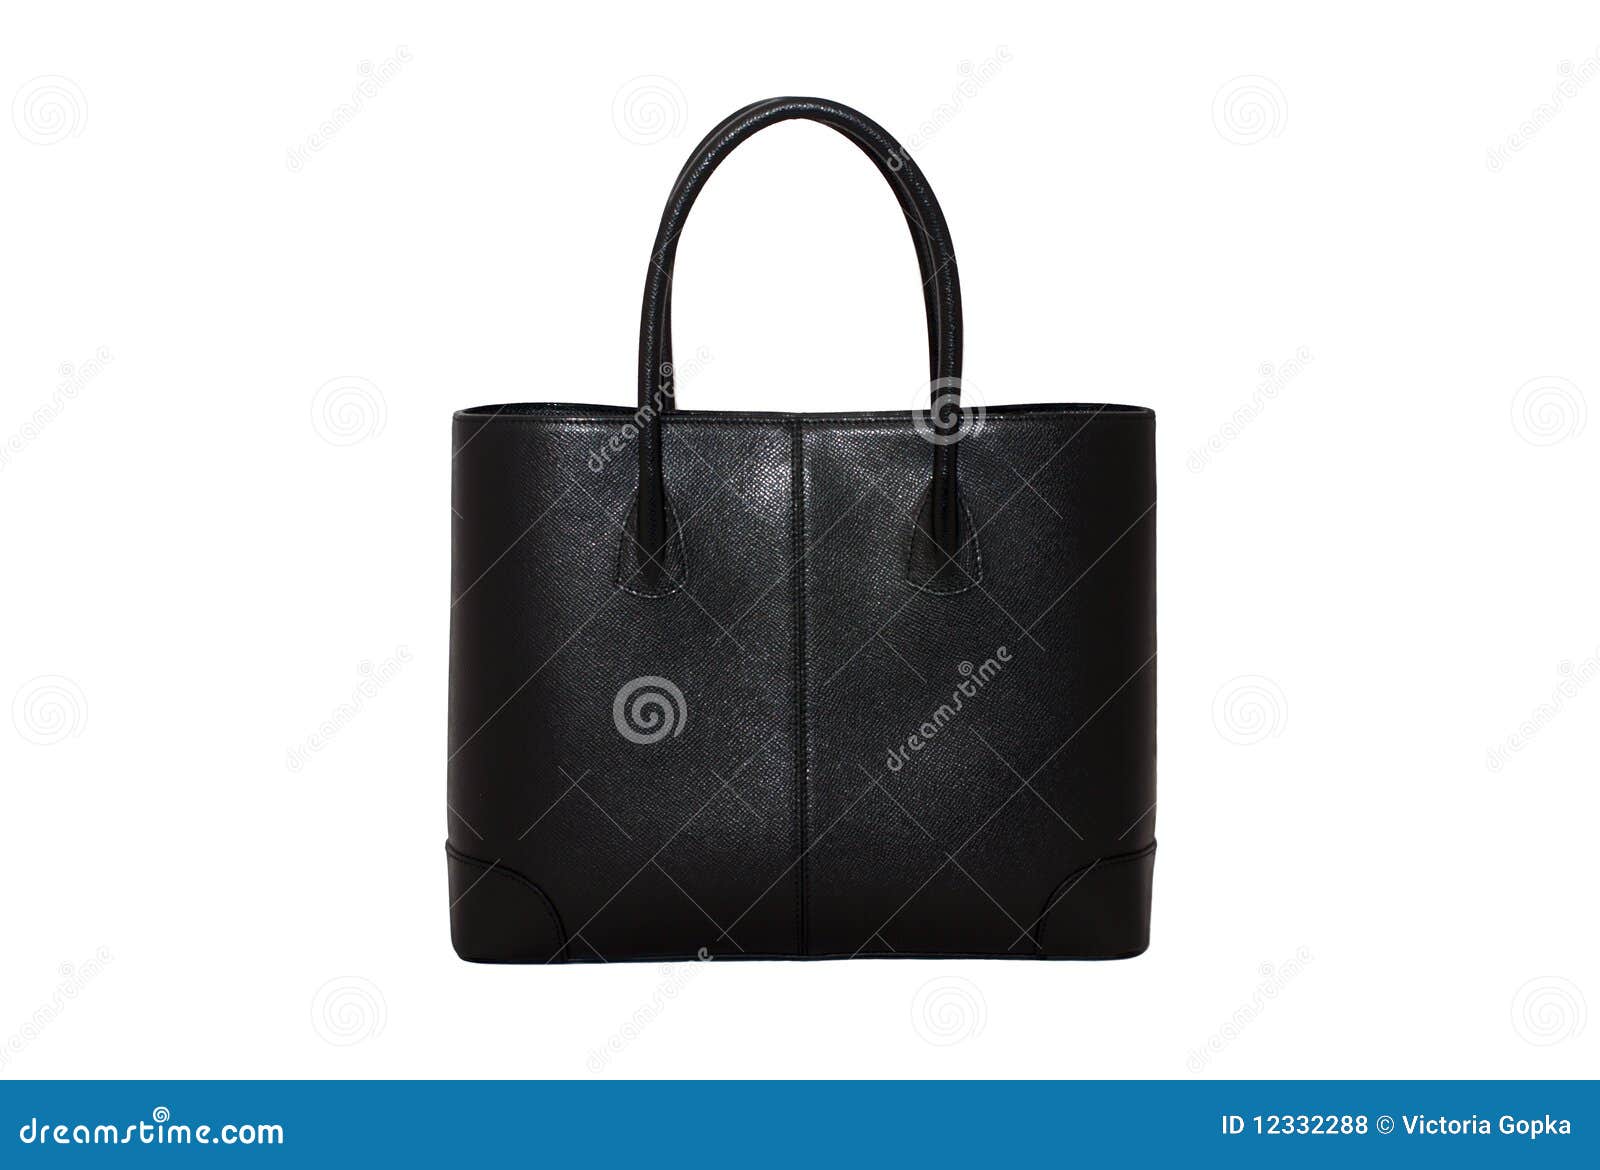 black woman handbag